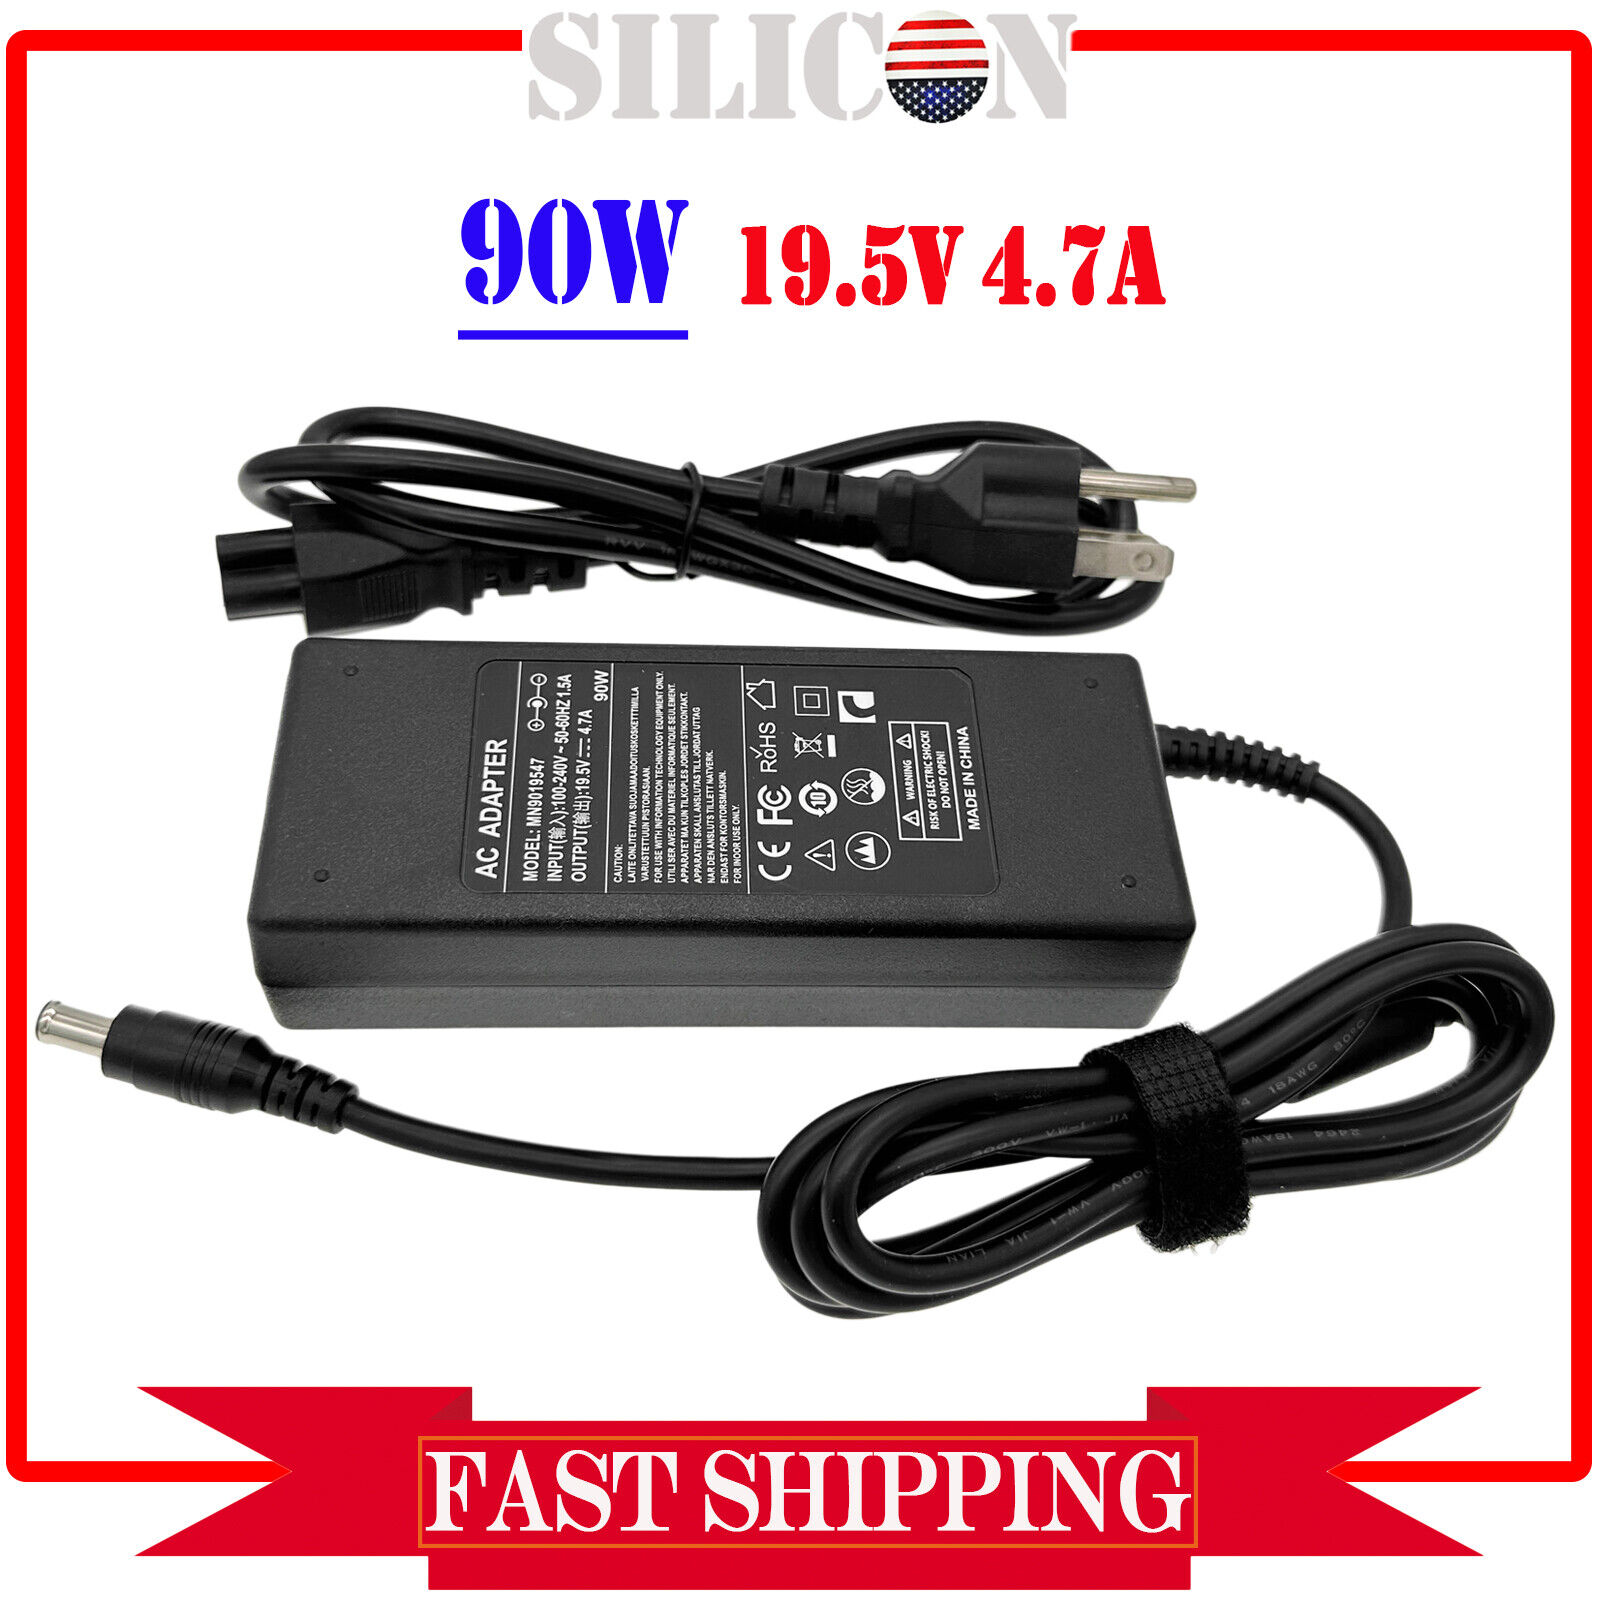 AC Adapter For LG 27LP600B-PU 27LP615B-PU LED TV Monitor Power Supply Cord